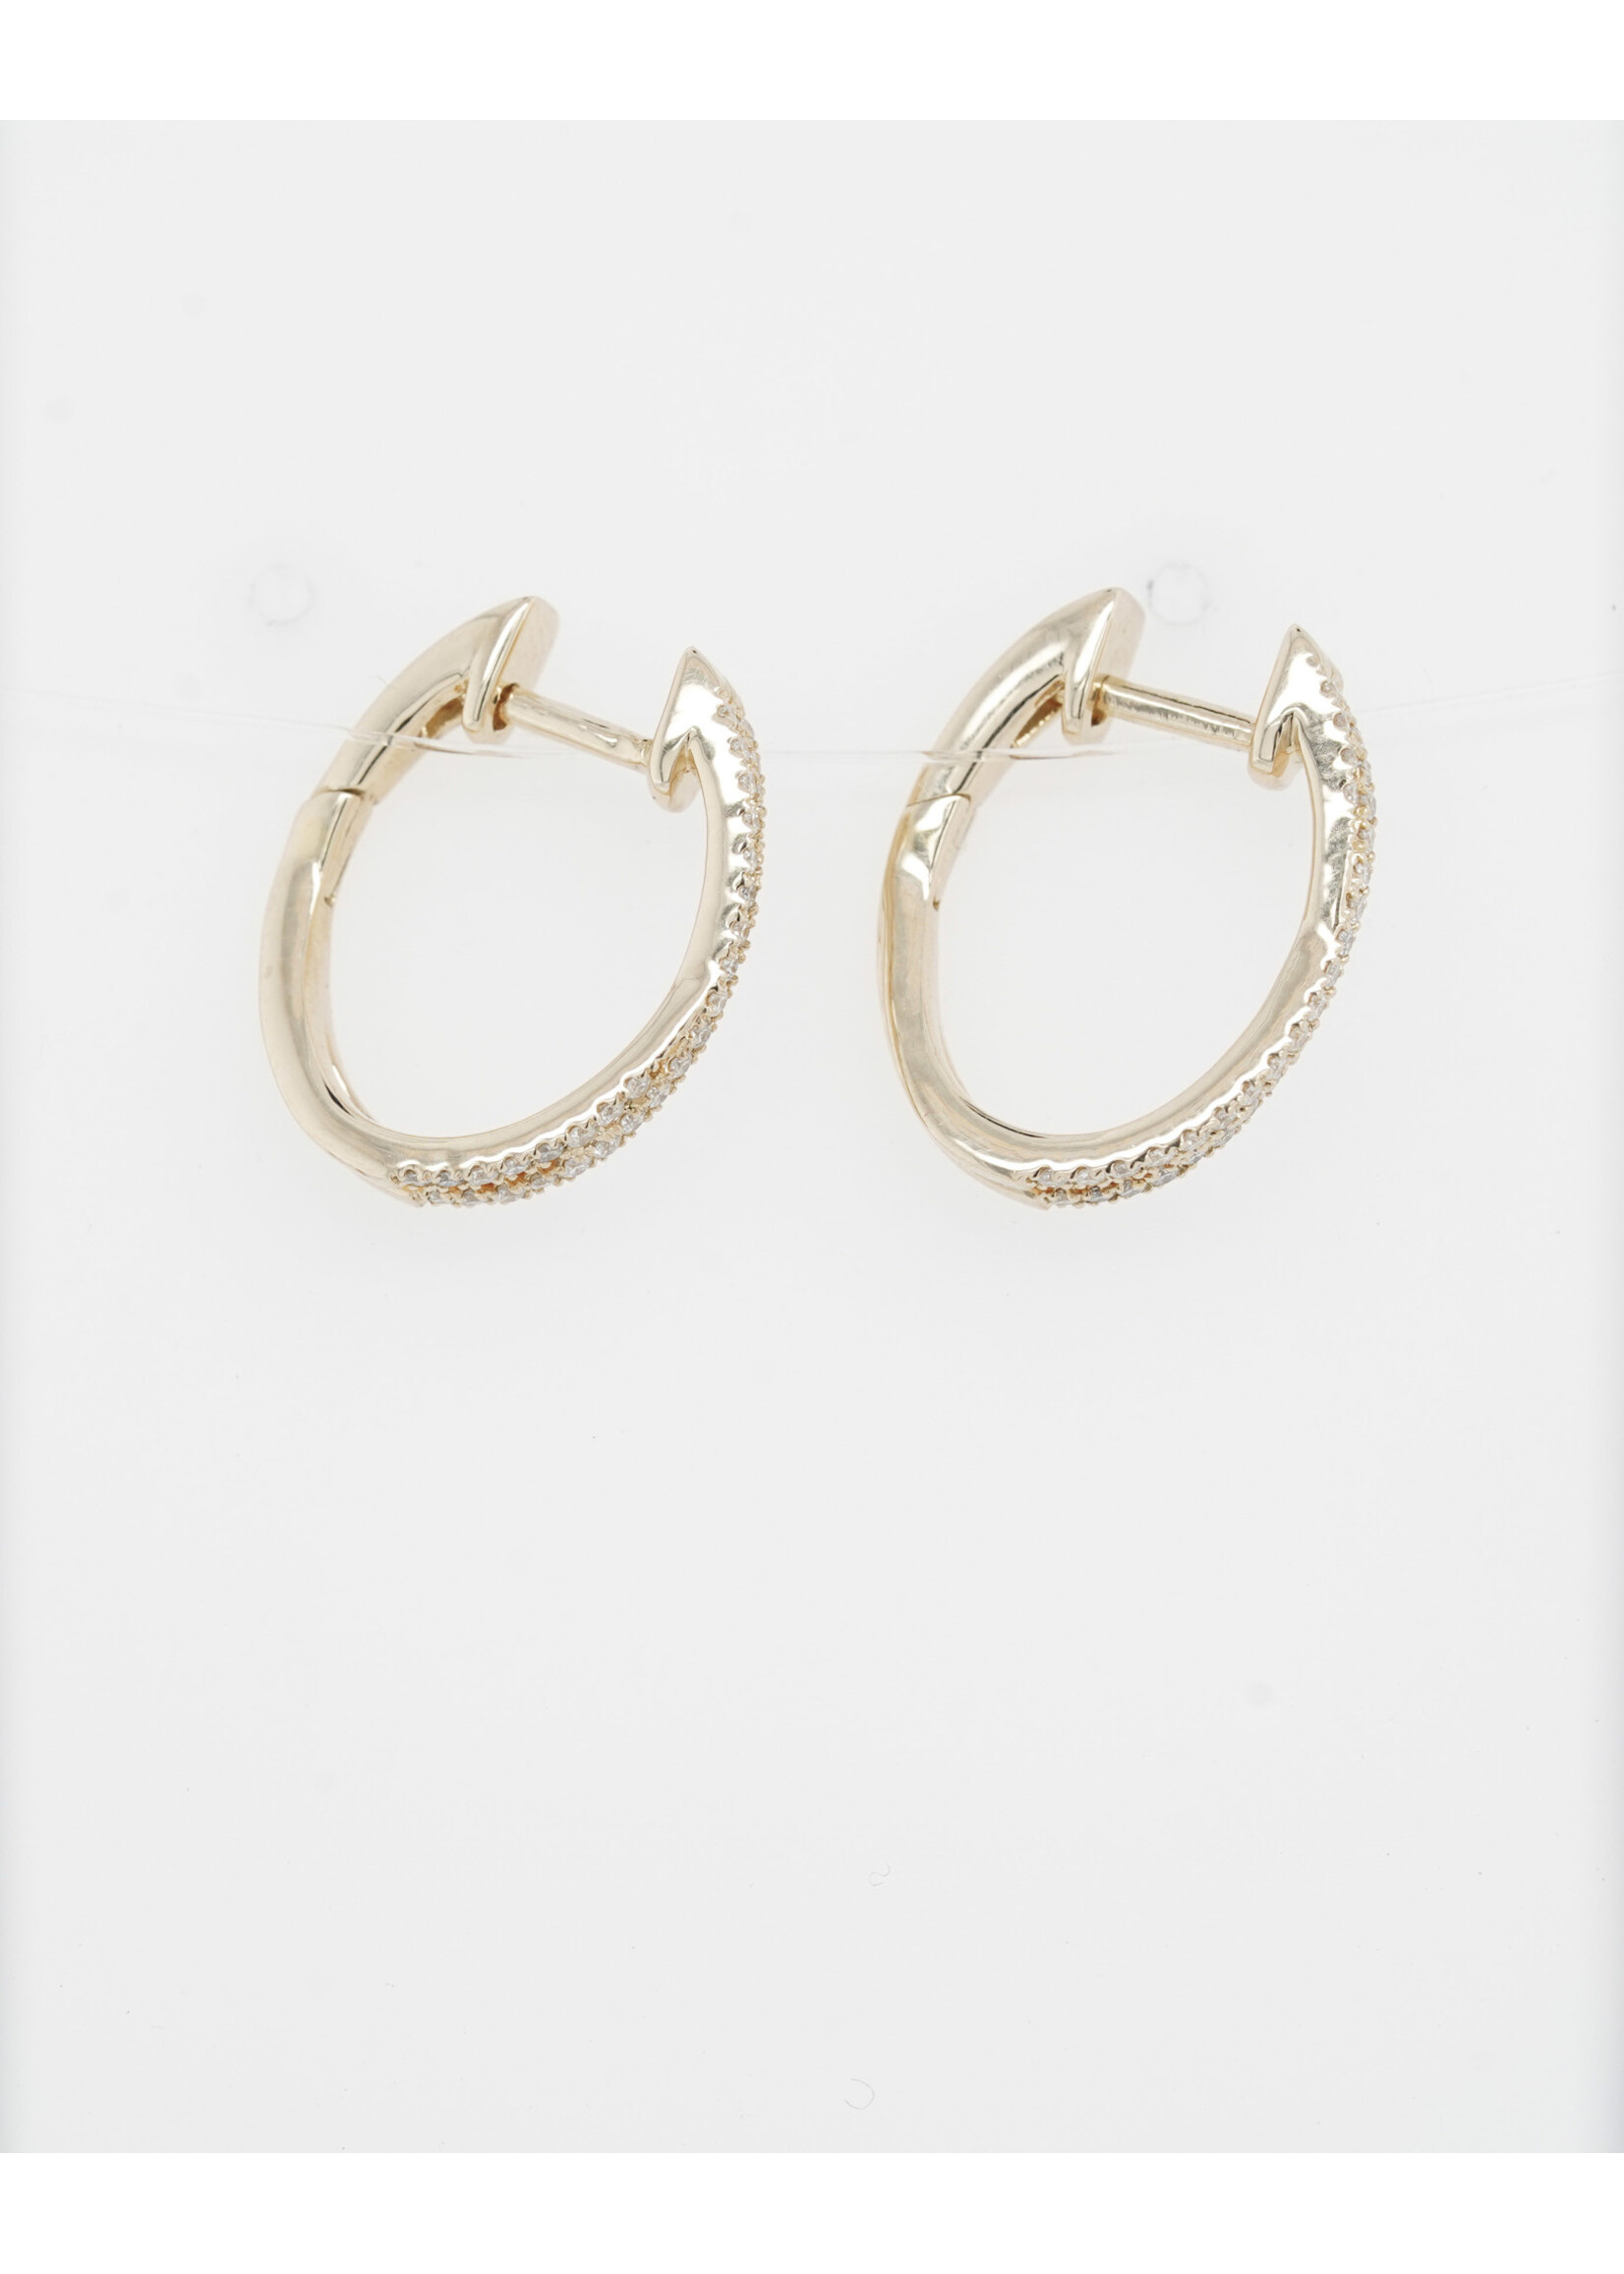 14KY 3.3g .25ctw Small Twisted Diamond Hoop Earrings